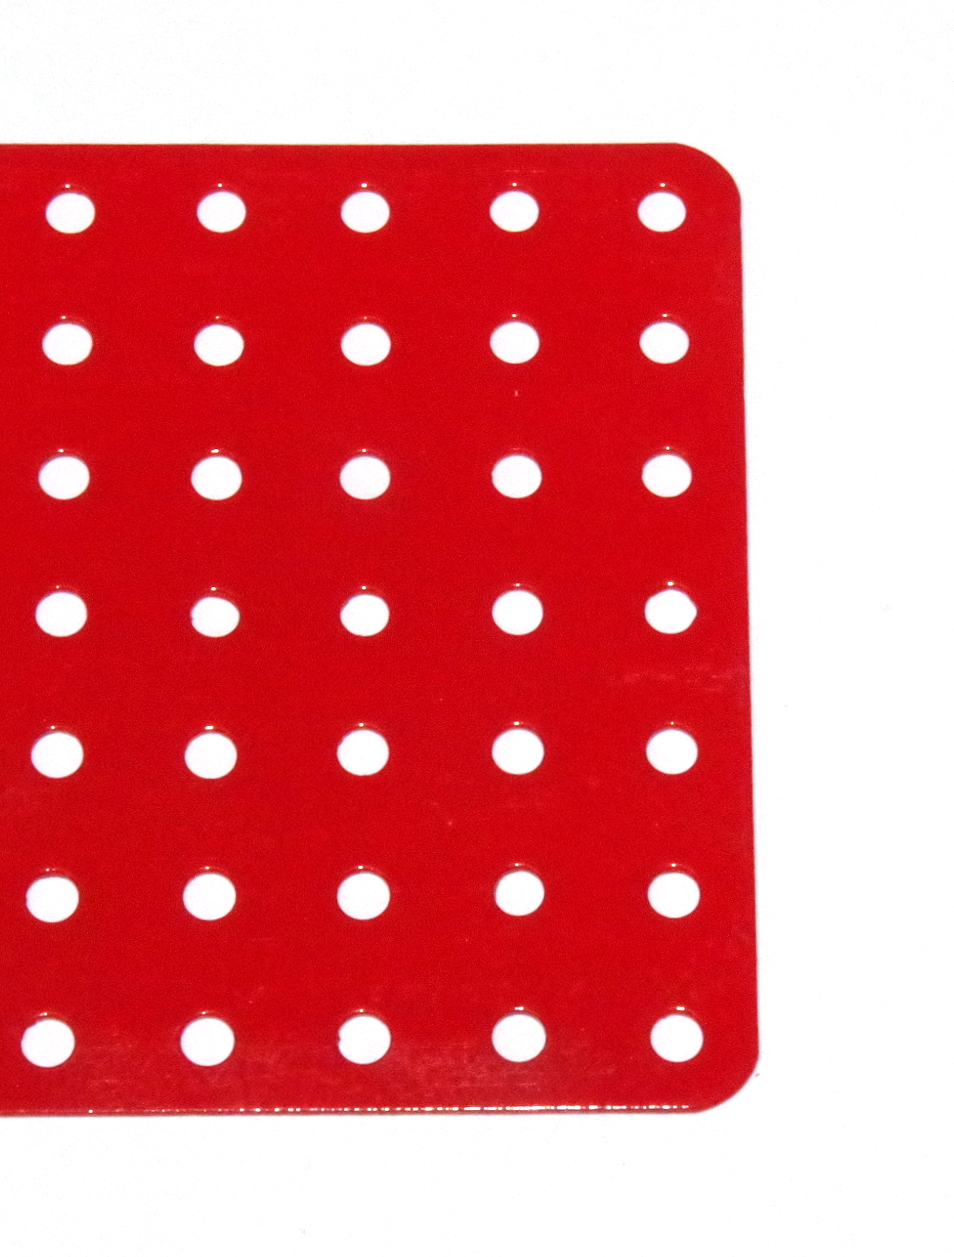 52b Flat Plate 7x15 Hole Red